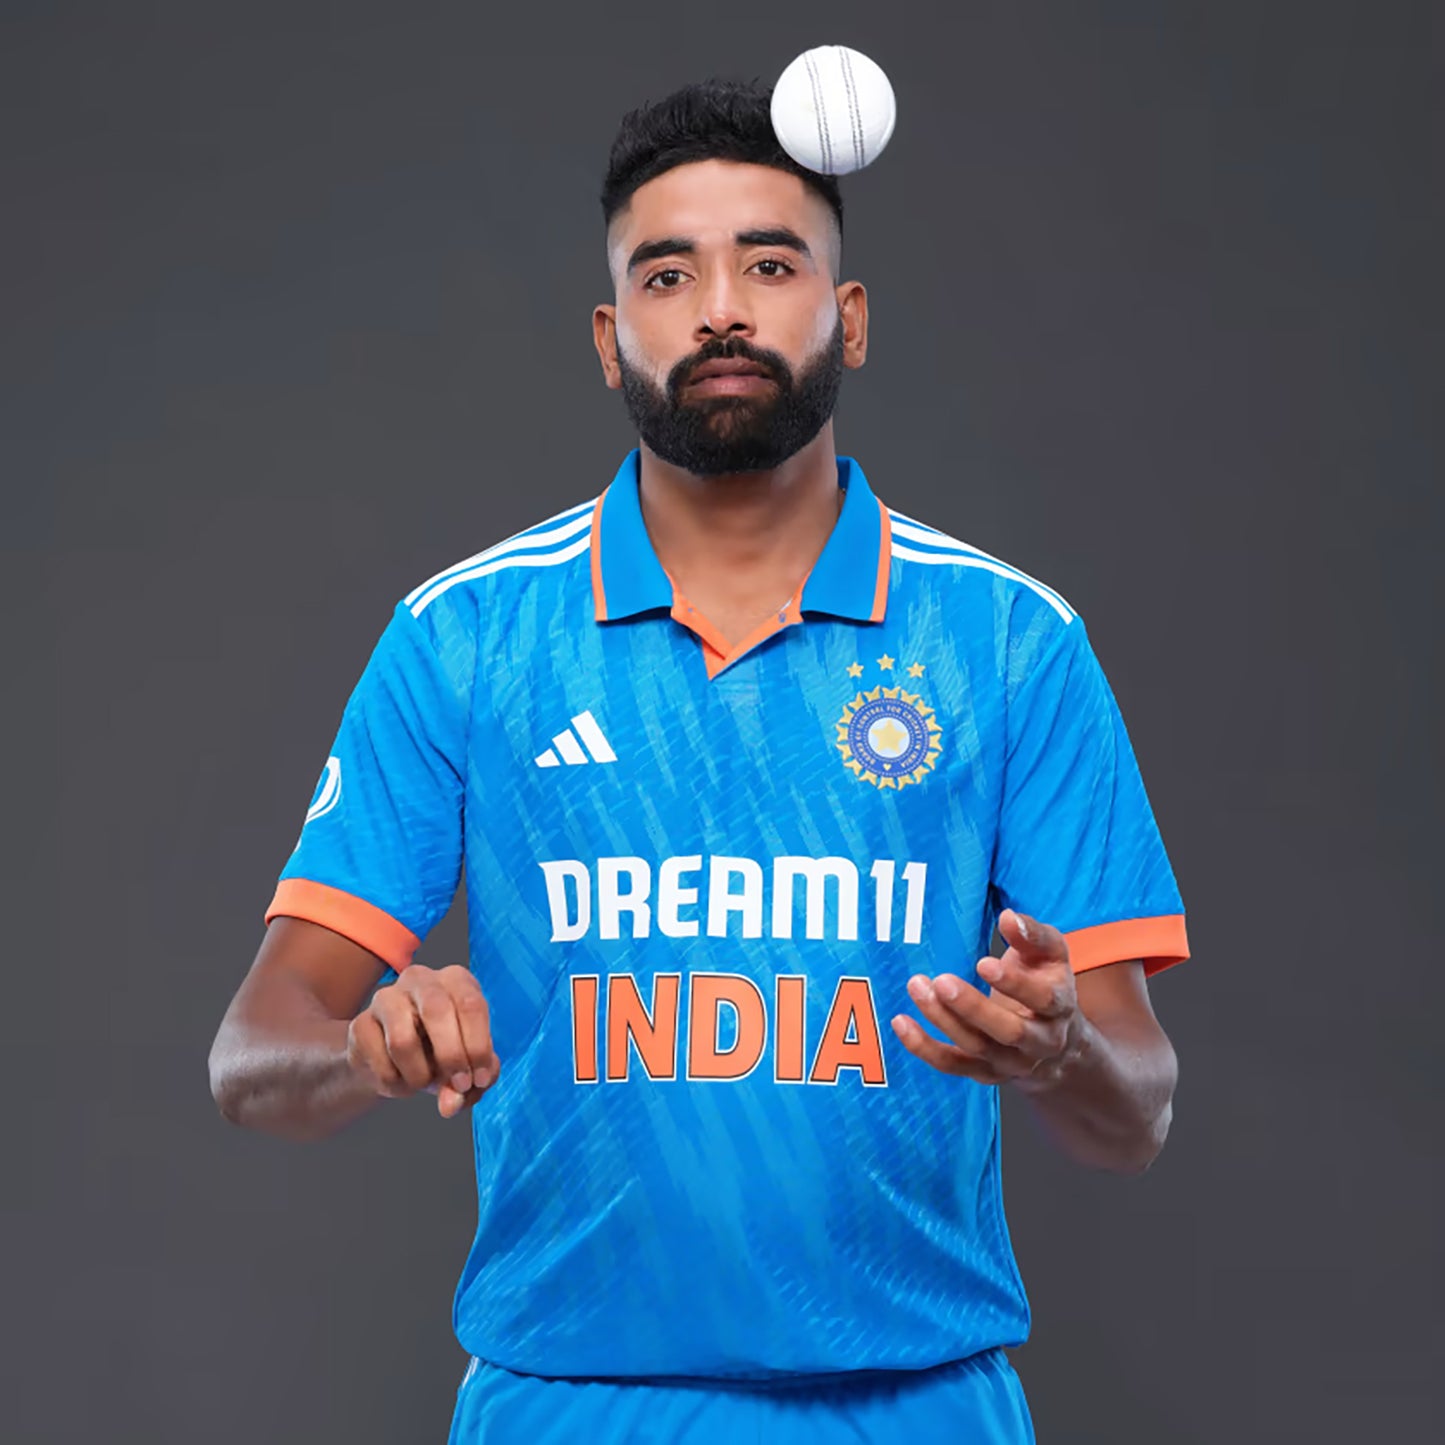 Adidas India Cricket ODI Jersey for Men, Bright Blue - Best Price online Prokicksports.com